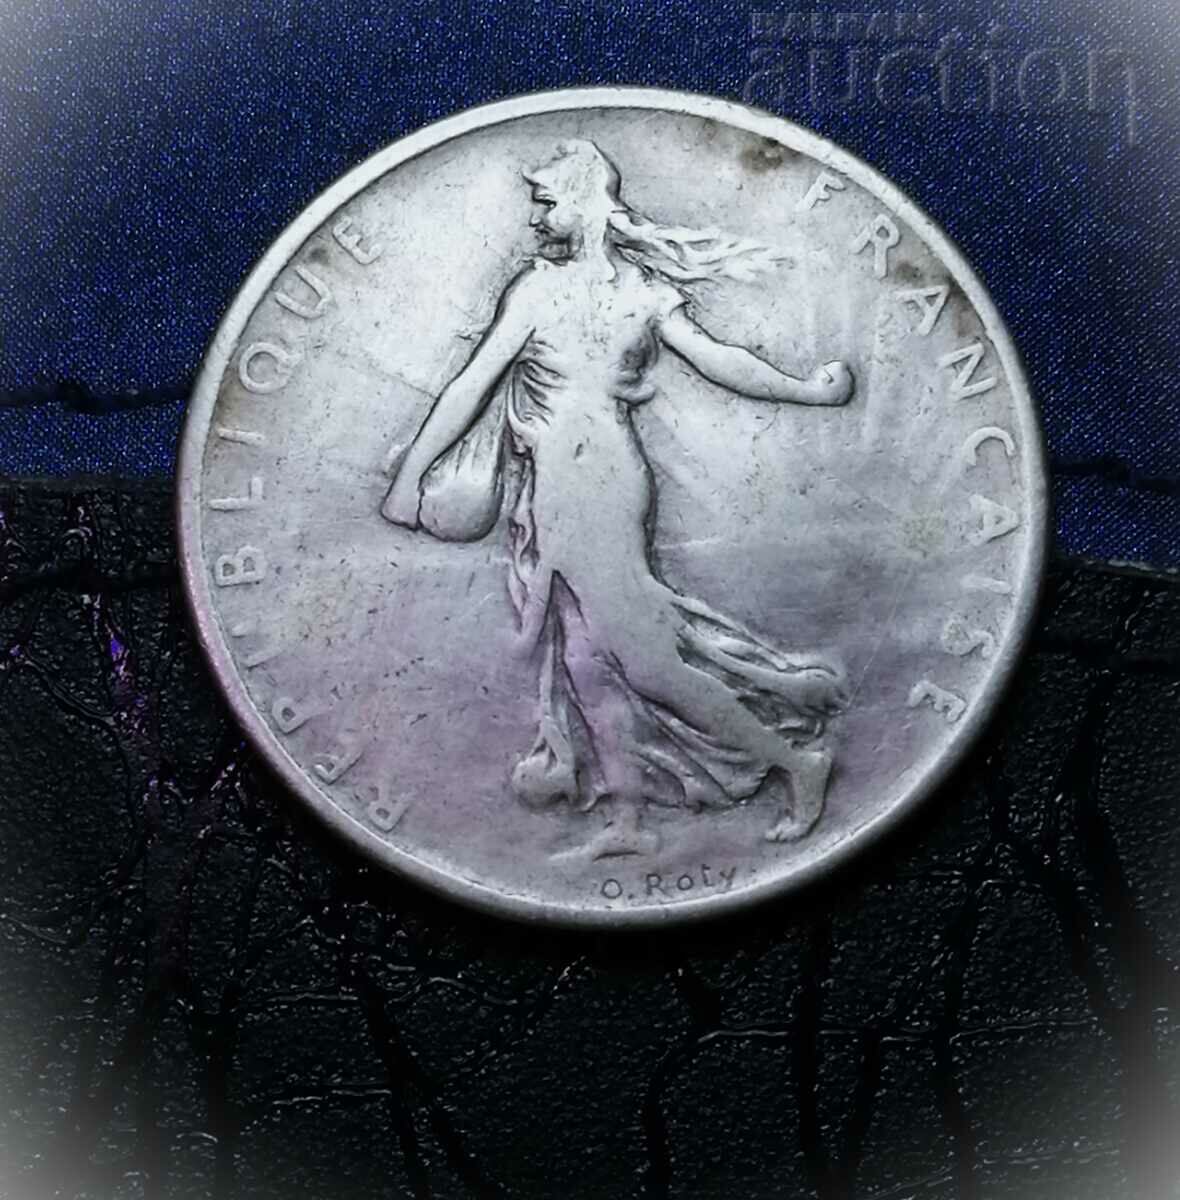 1 franc 1899, Franța, Argint. - 5 grame, proba 835.